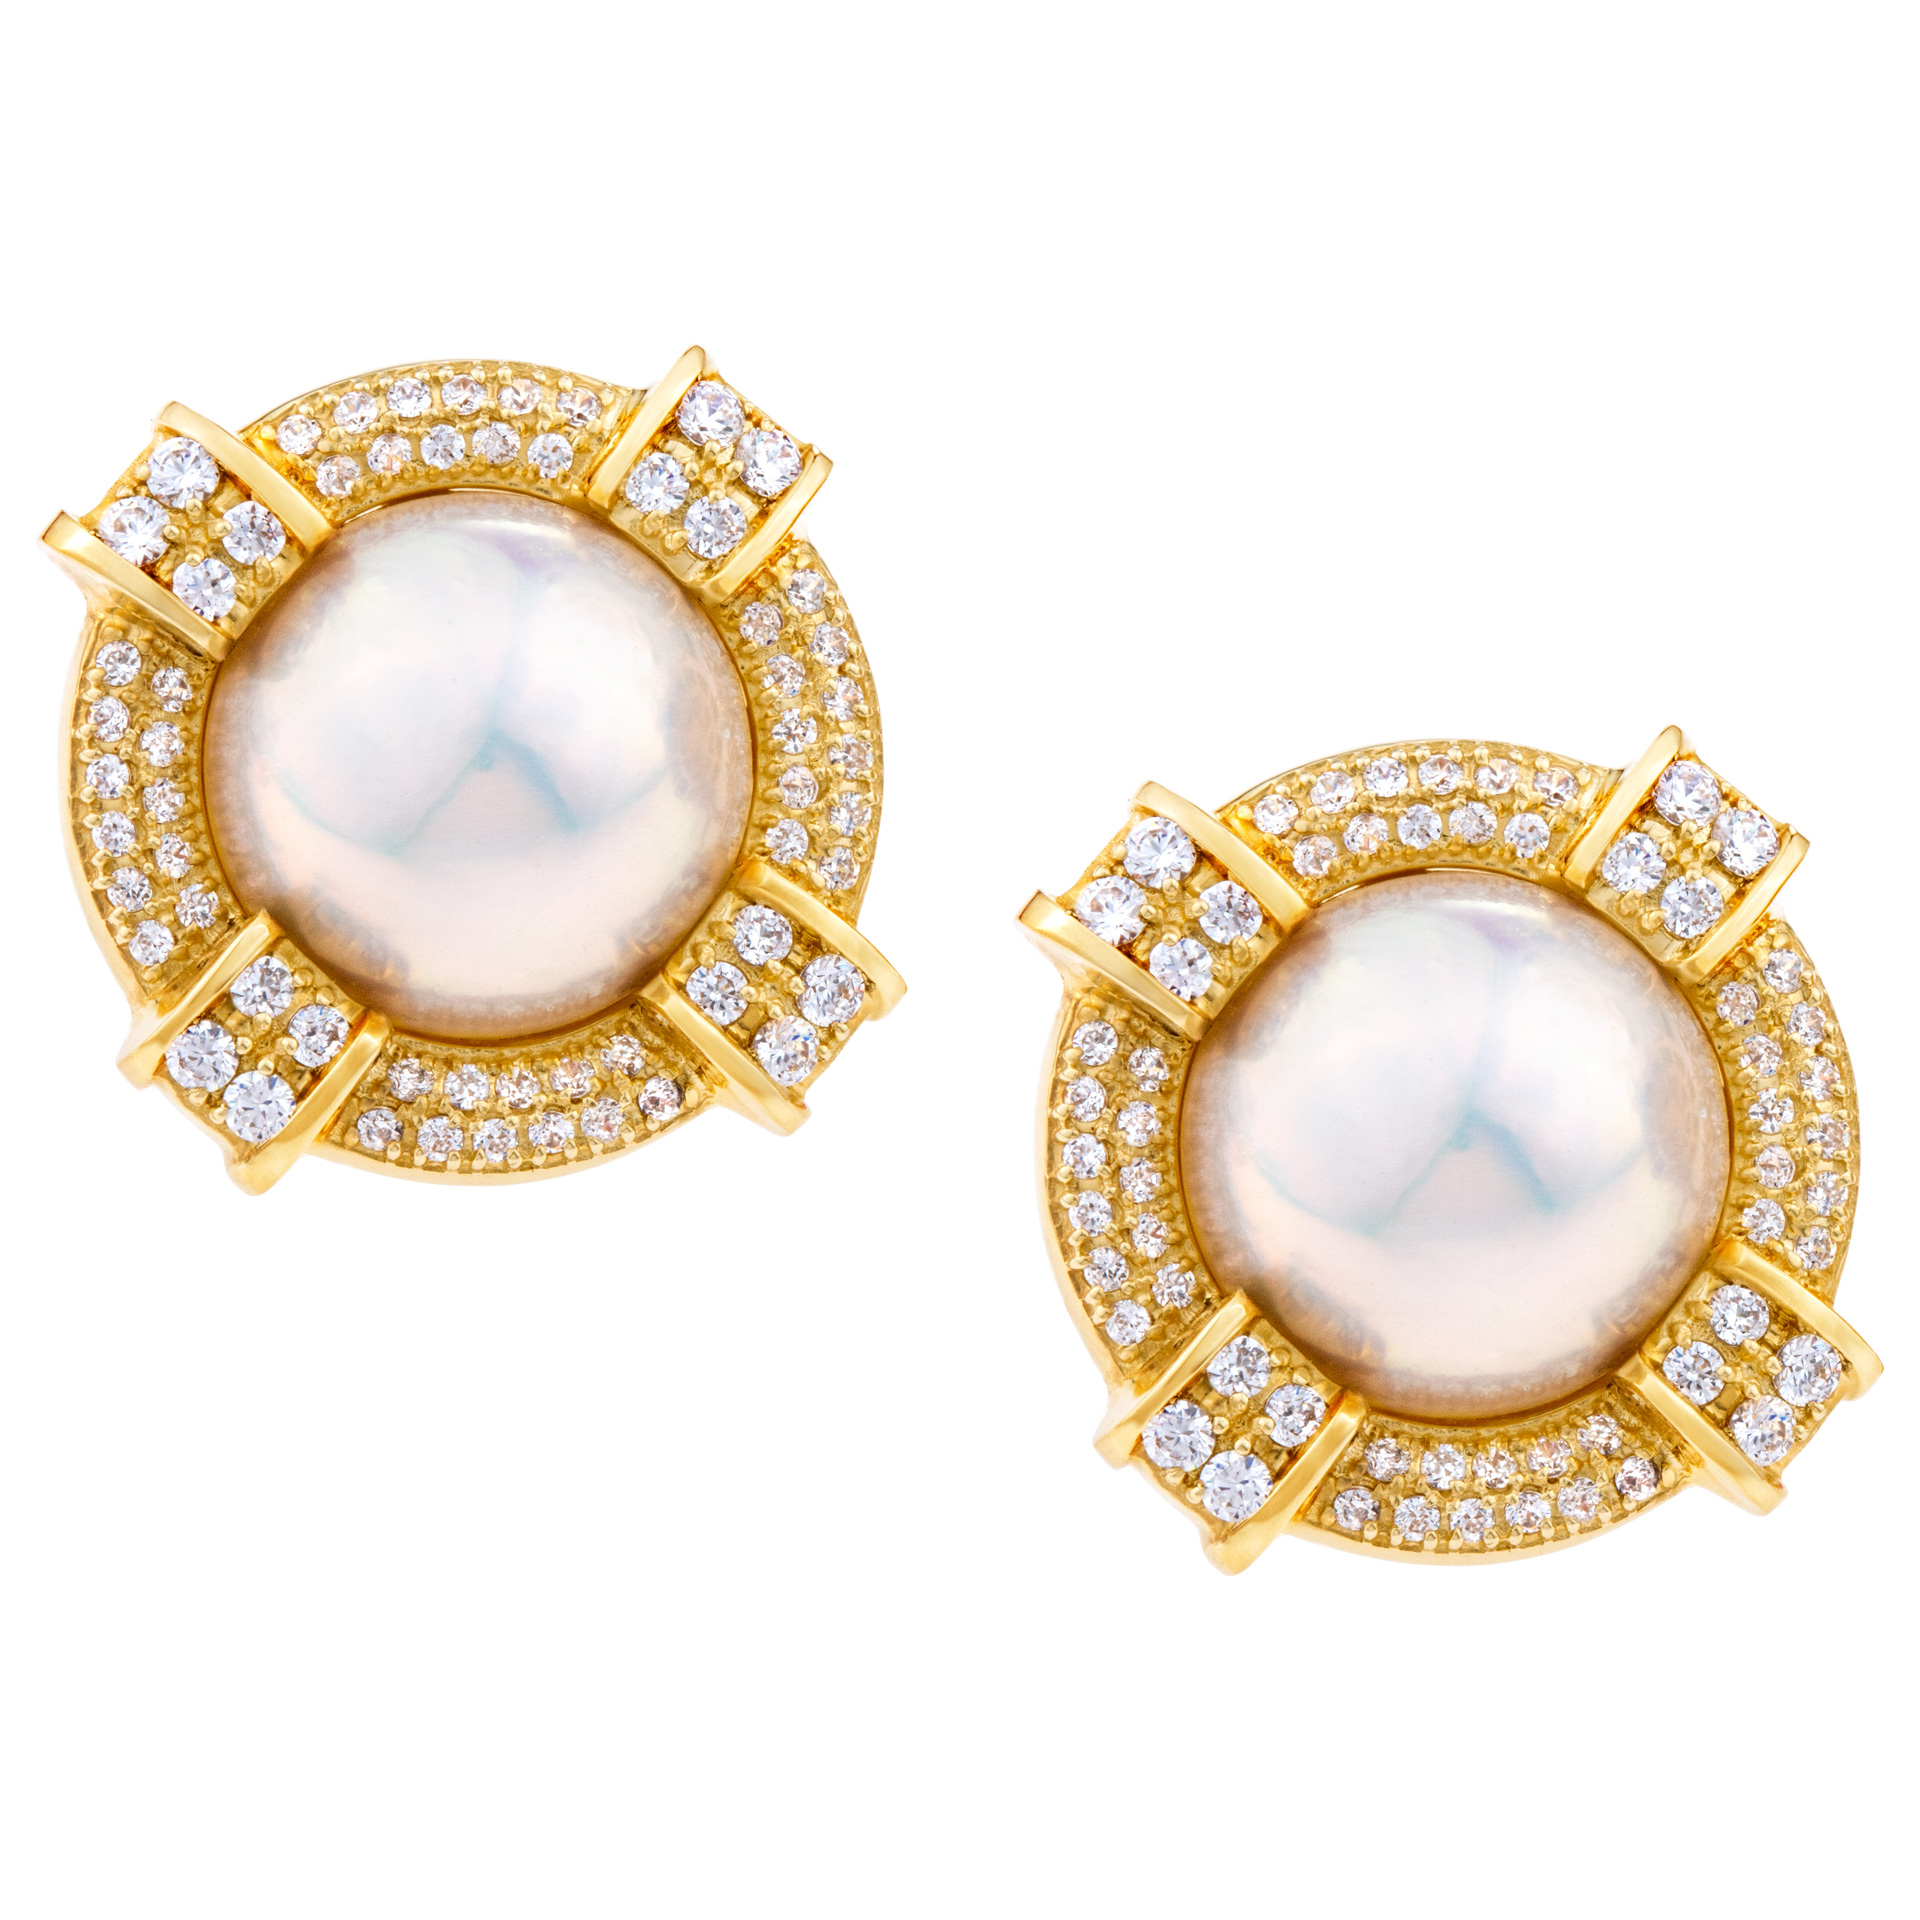 Pearl and diamond earrings in 14k yellow gold